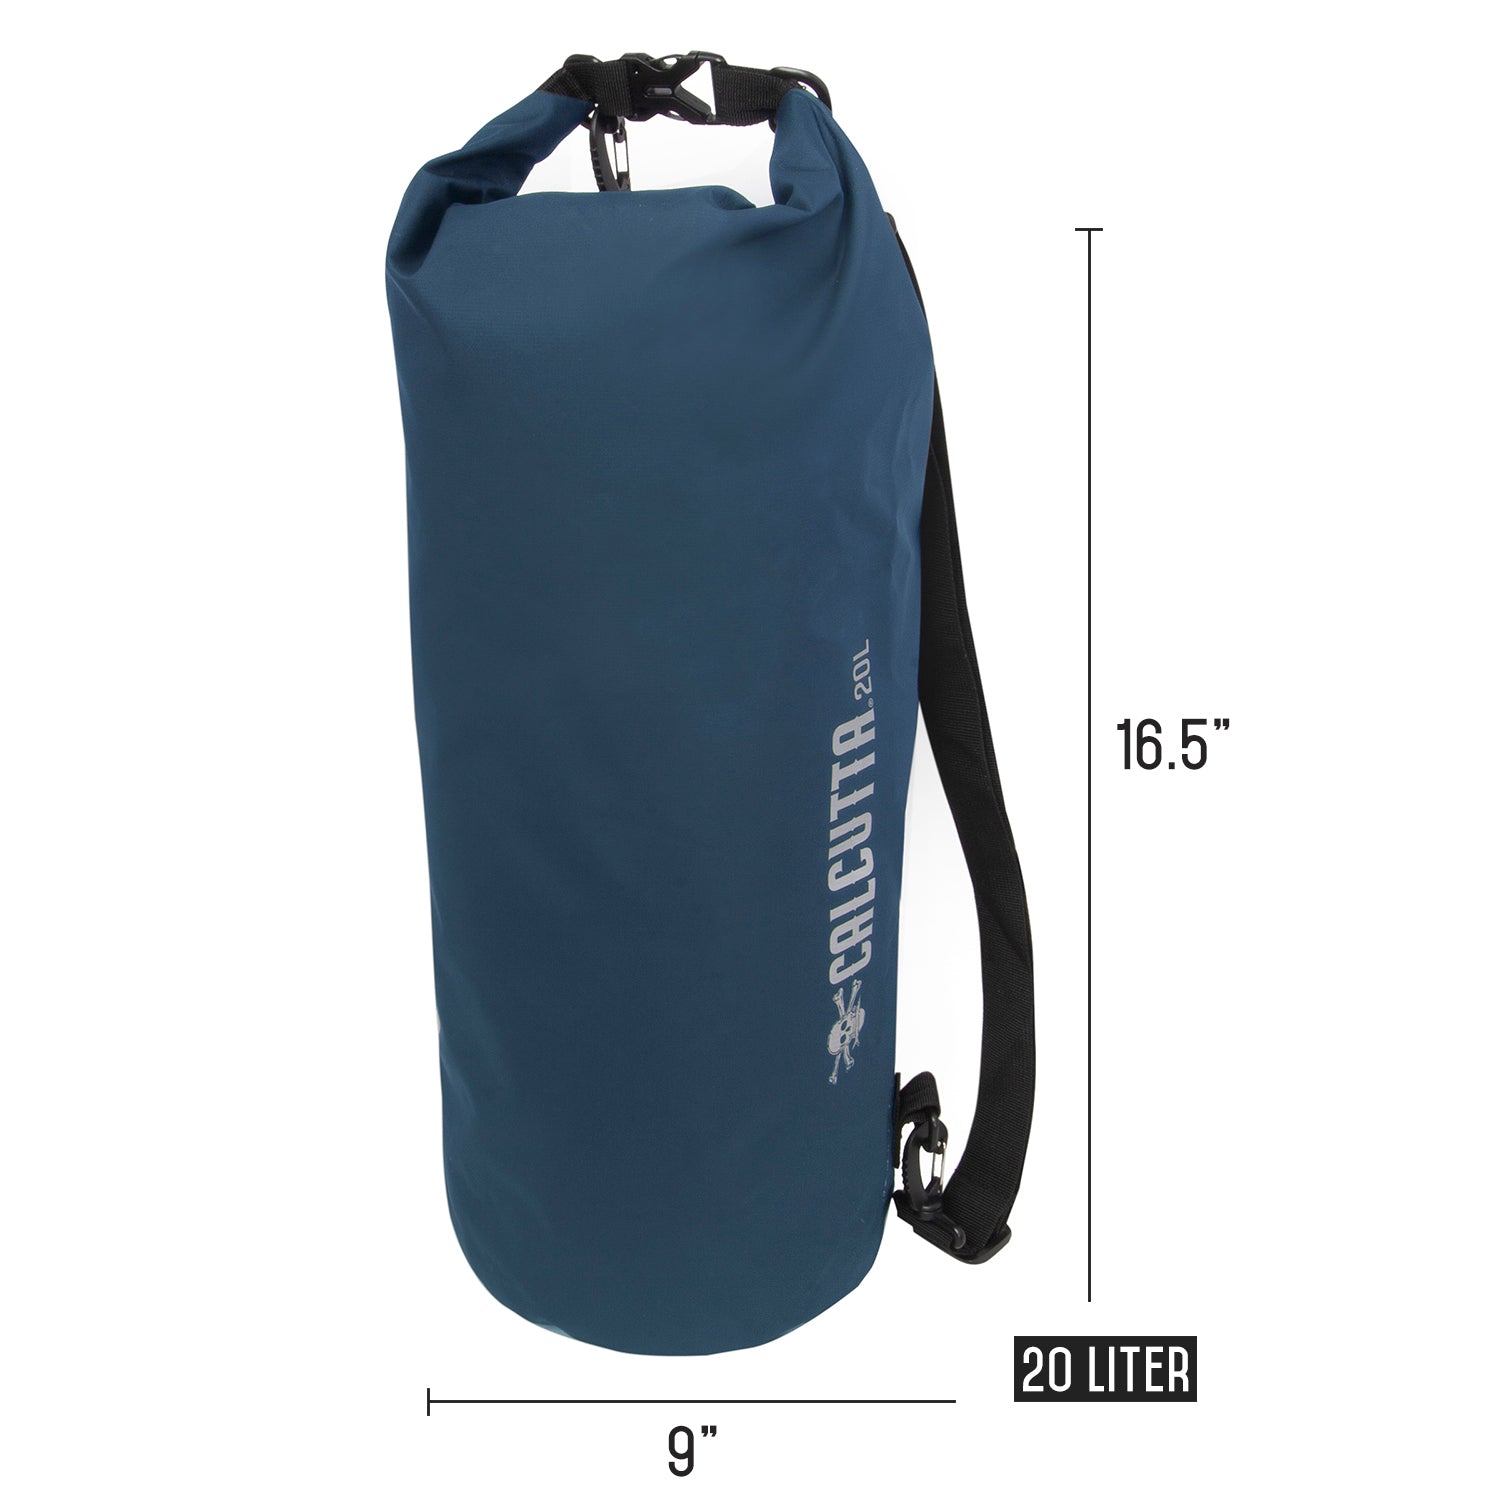 Calcutta dry bag 20L blue measurements